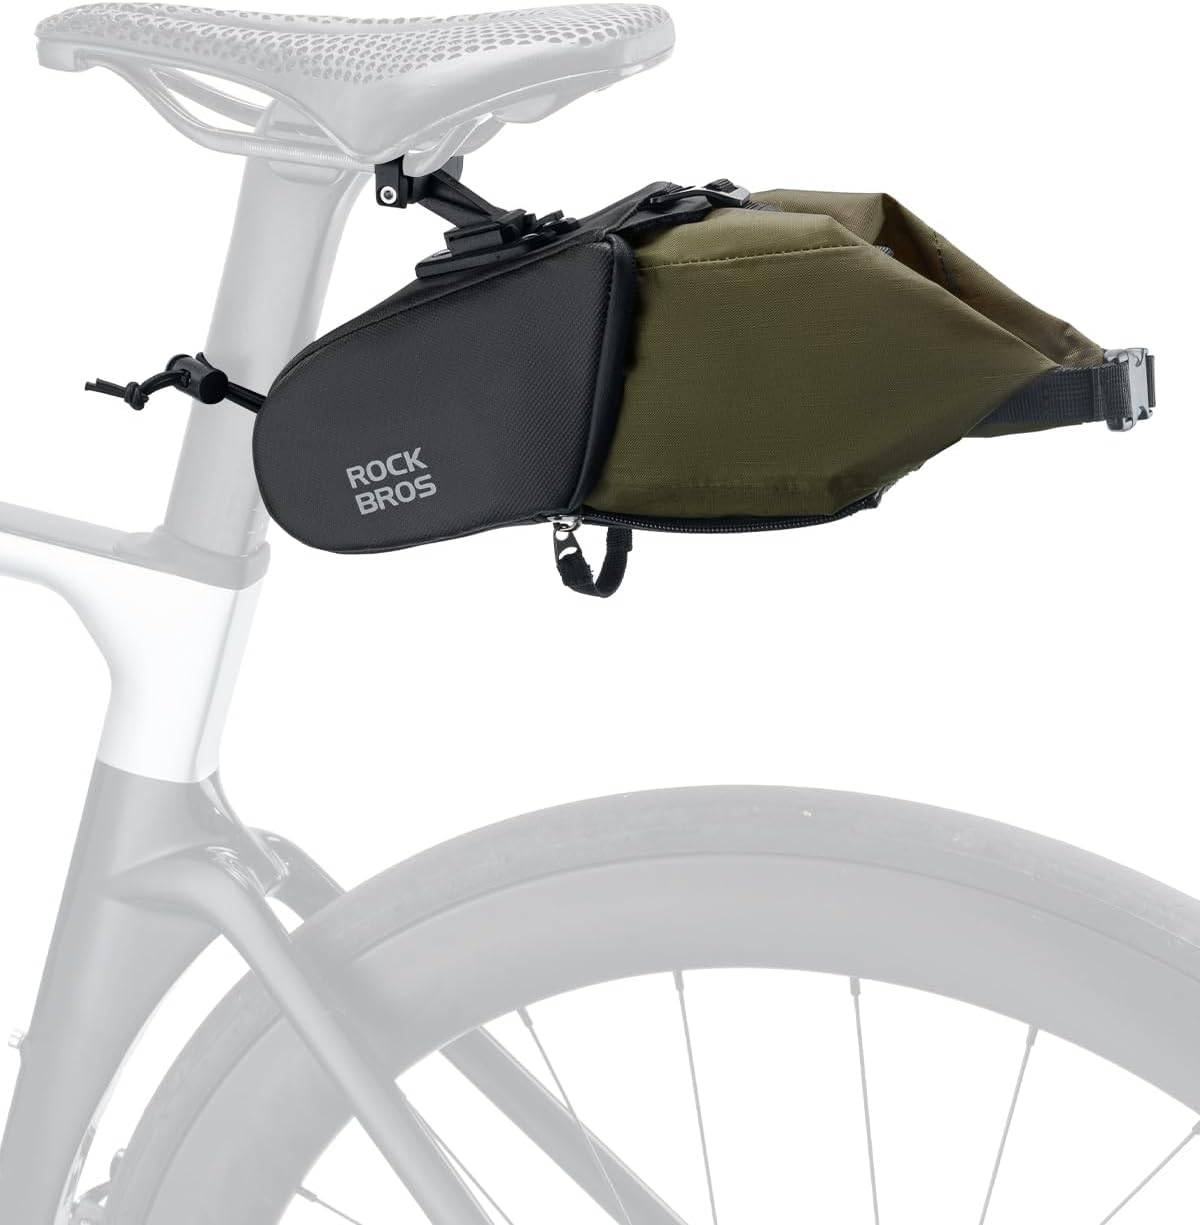 ROCKBROS Bike Saddle Bag With Bucket Bag Quick Release 0.8-1.3L